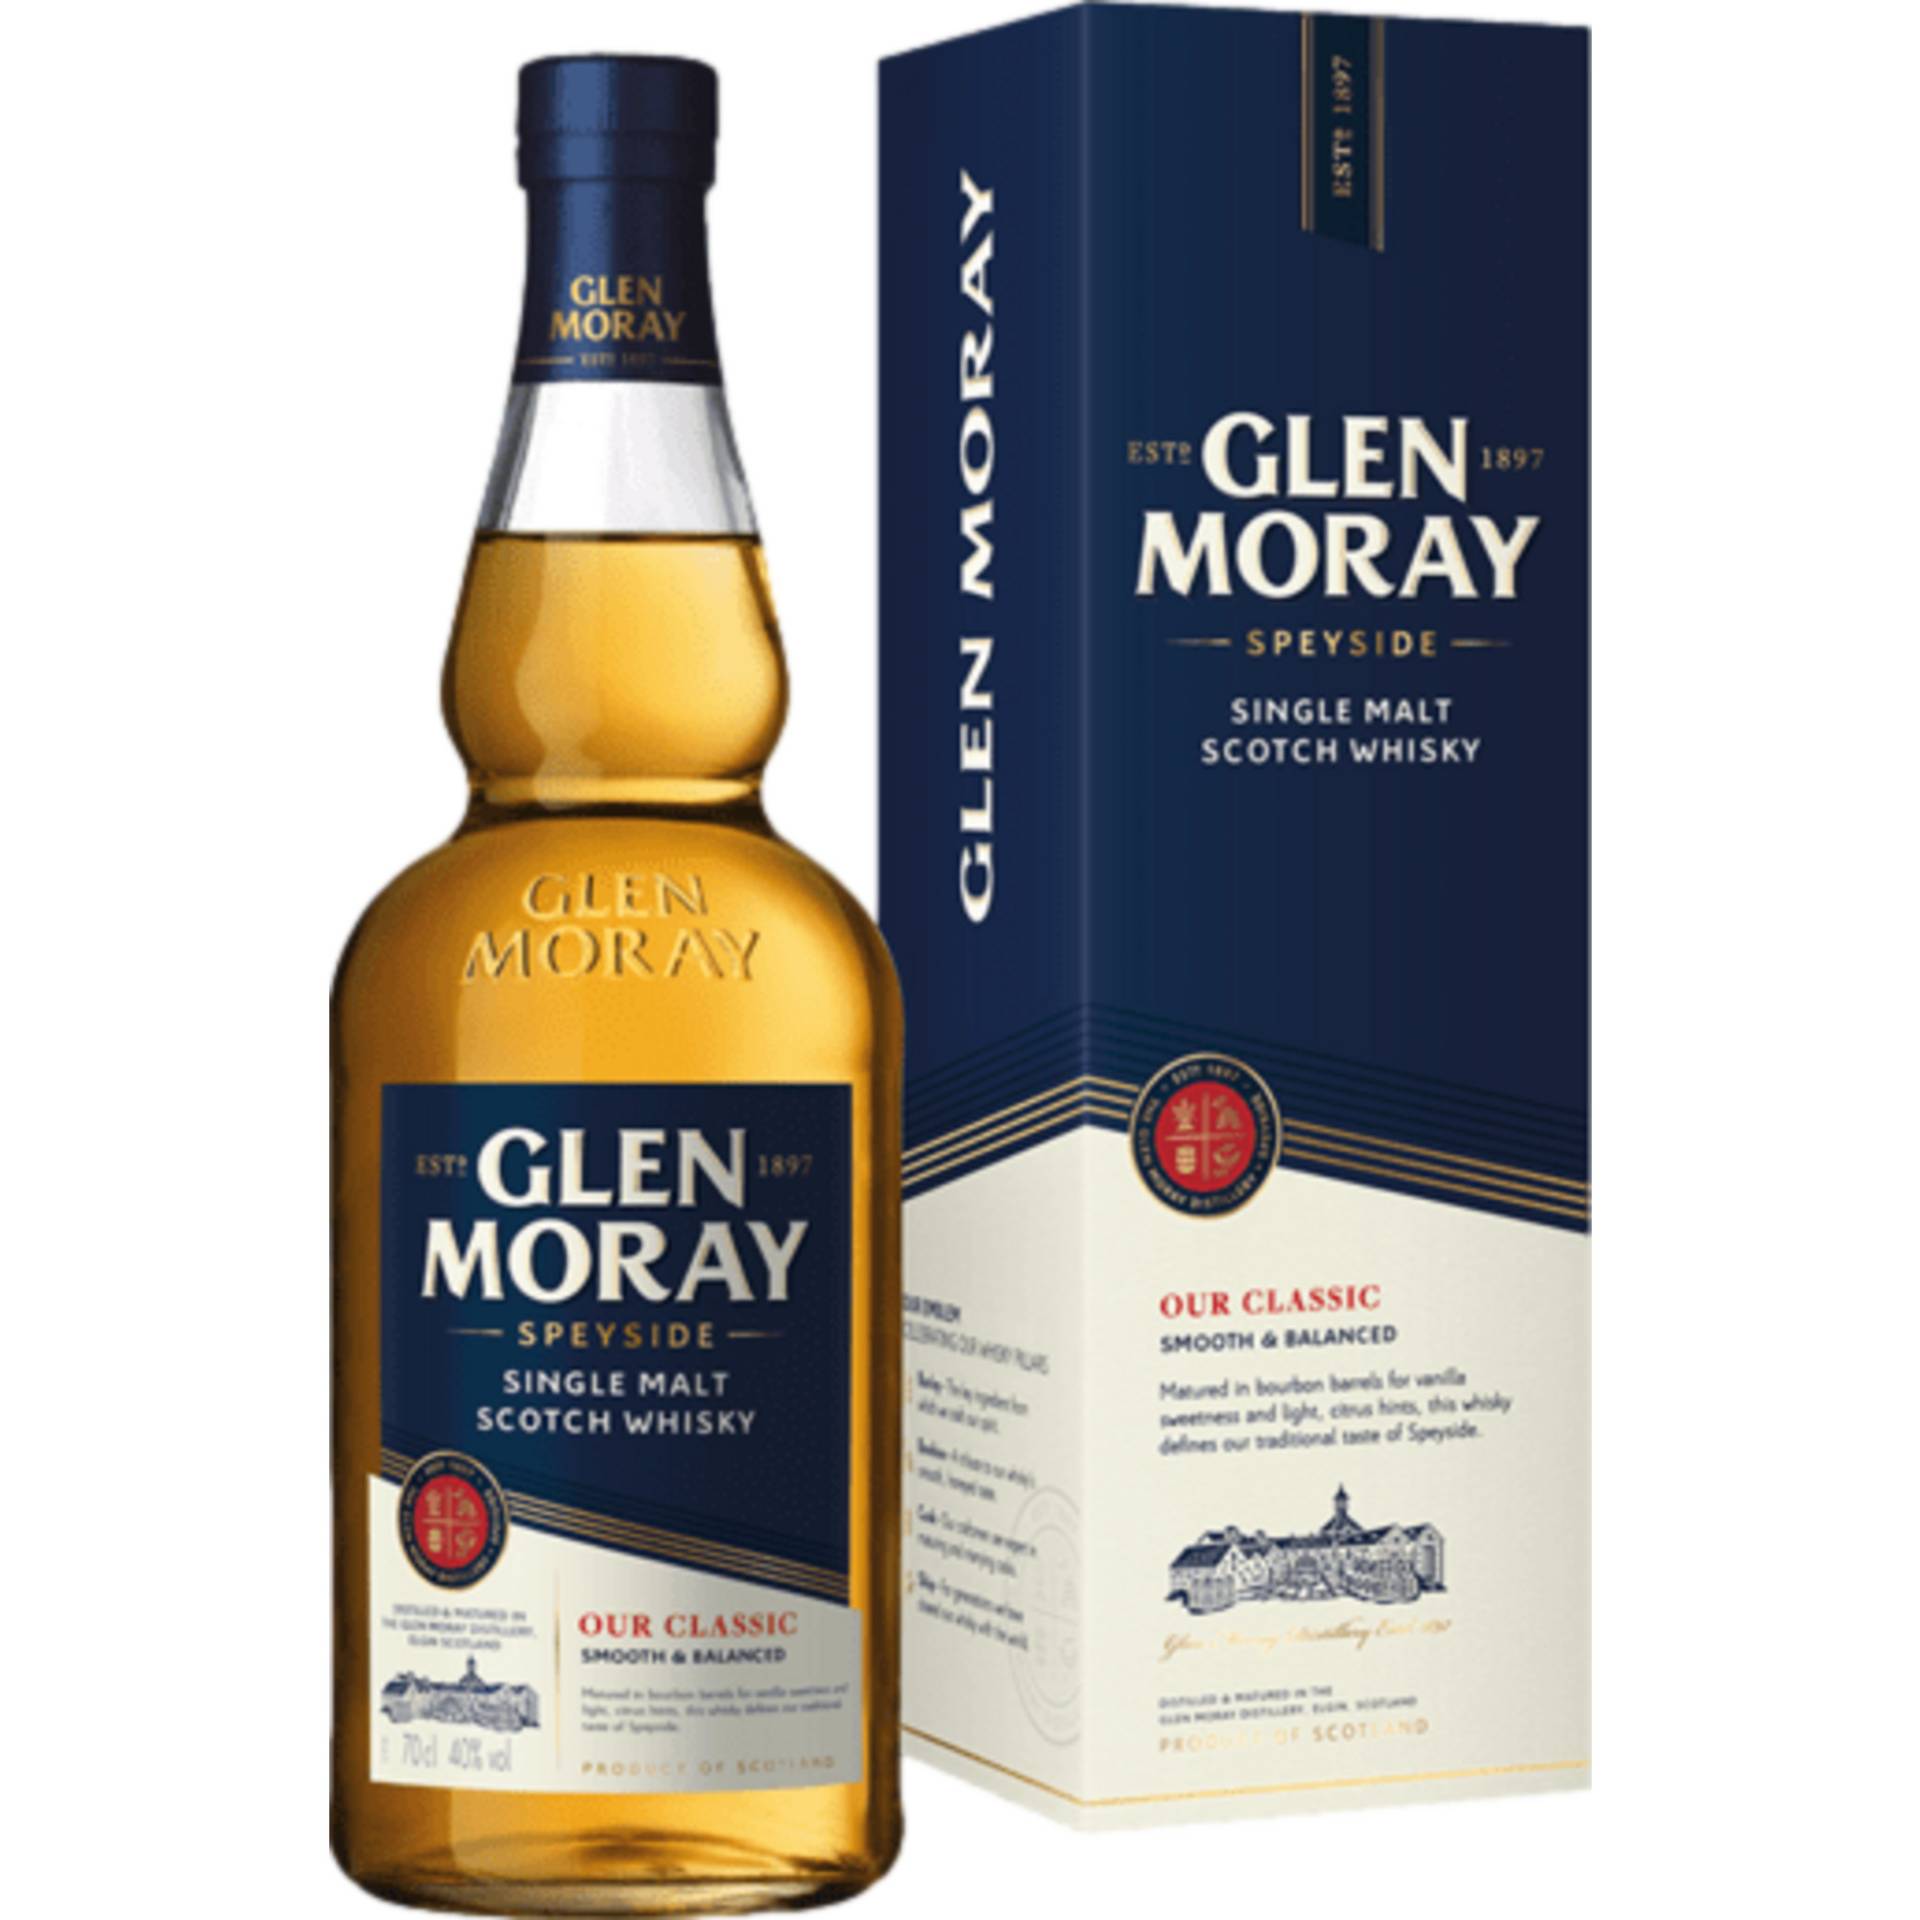 Glen Moray Classic Speyside Single Malt, 40% Vol, 0,7 L, Spirituosen von Glen Moray Customer Service Société des Vins et Spiritueux LM 94220 Charenton France